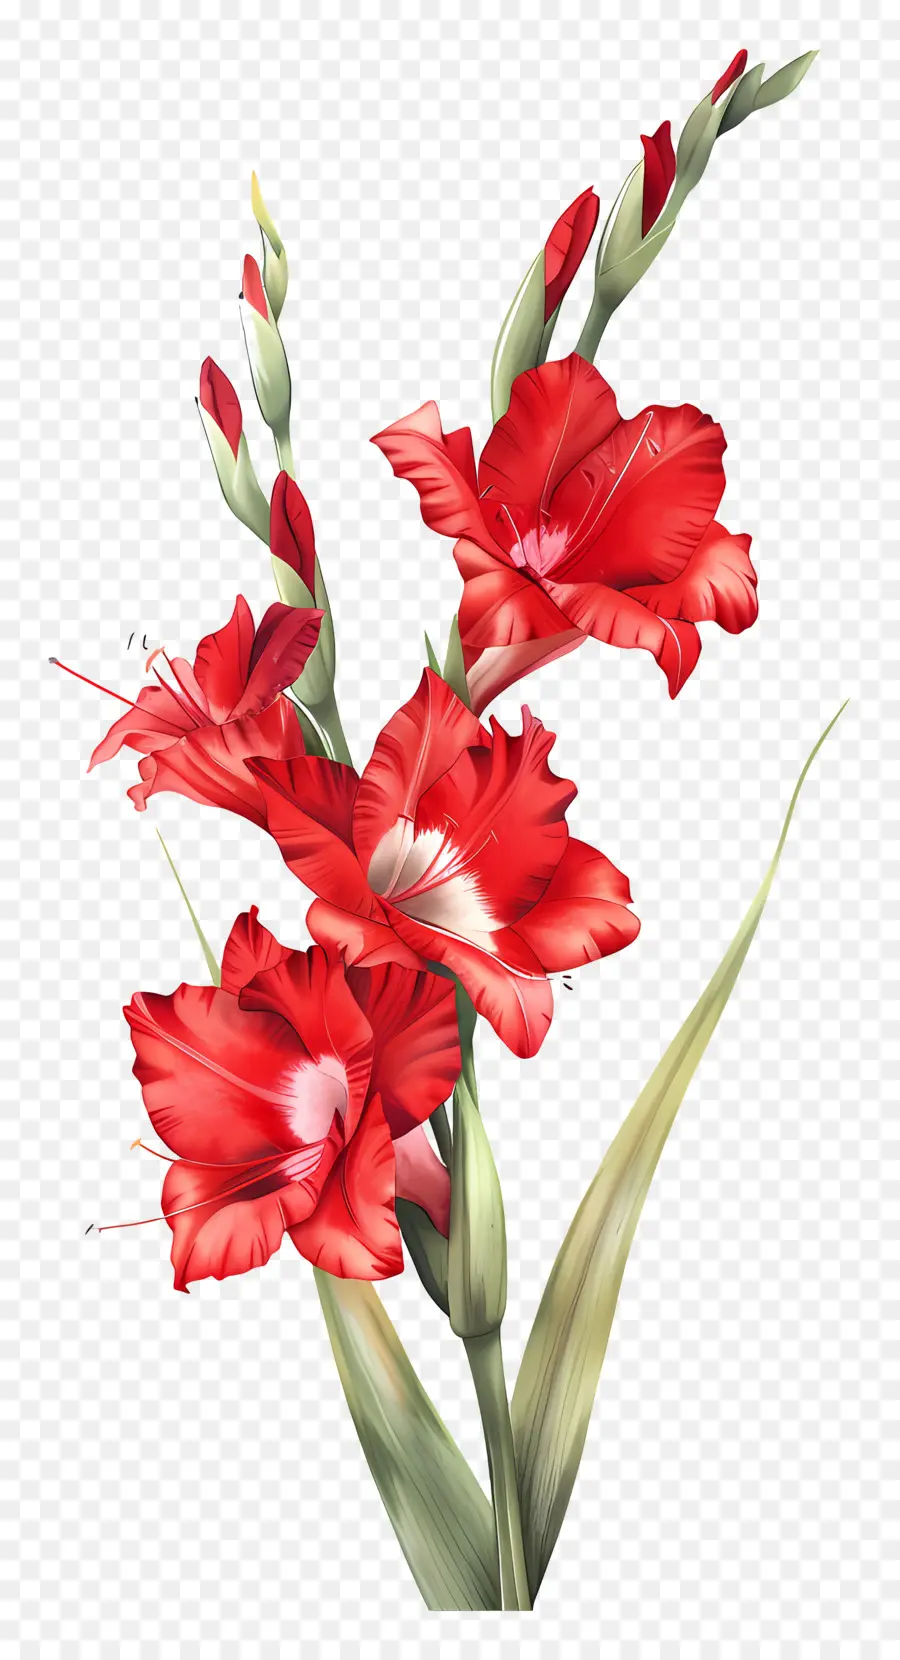 red gladioli red flowers vibrant blooms long petals red floral arrangement